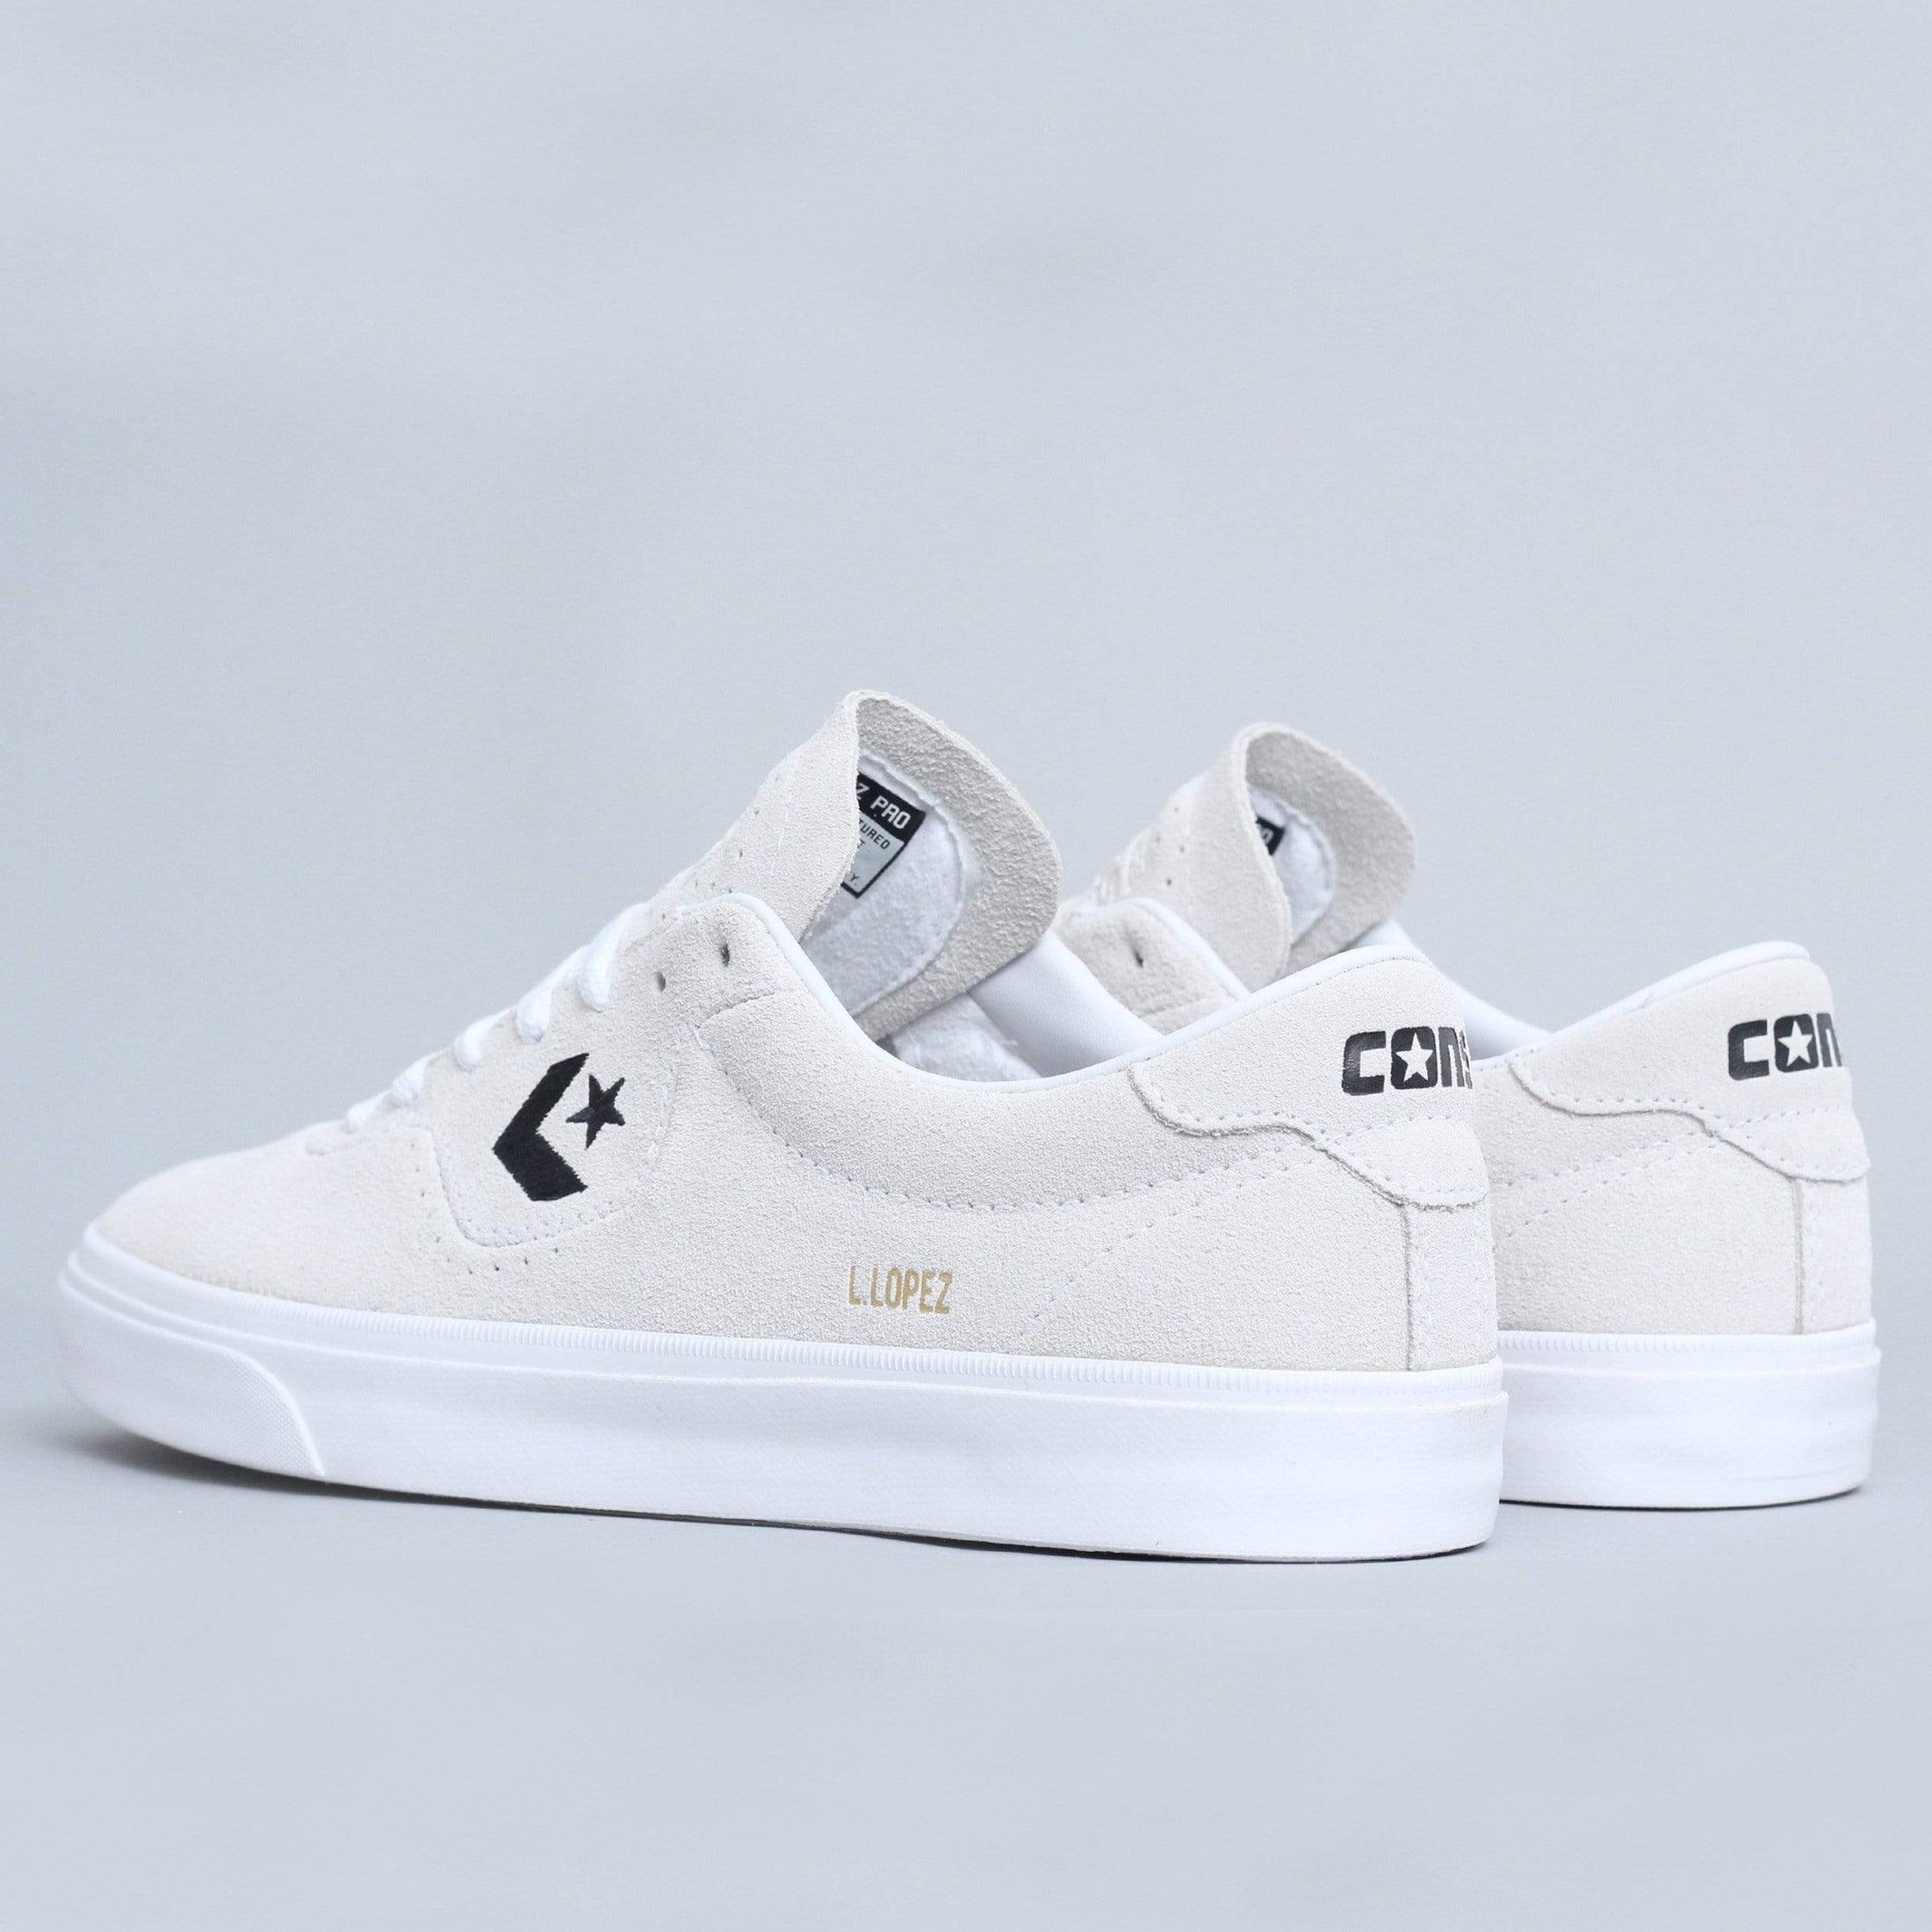 Converse Louie Lopez Pro Ox Shoes White / White / Black